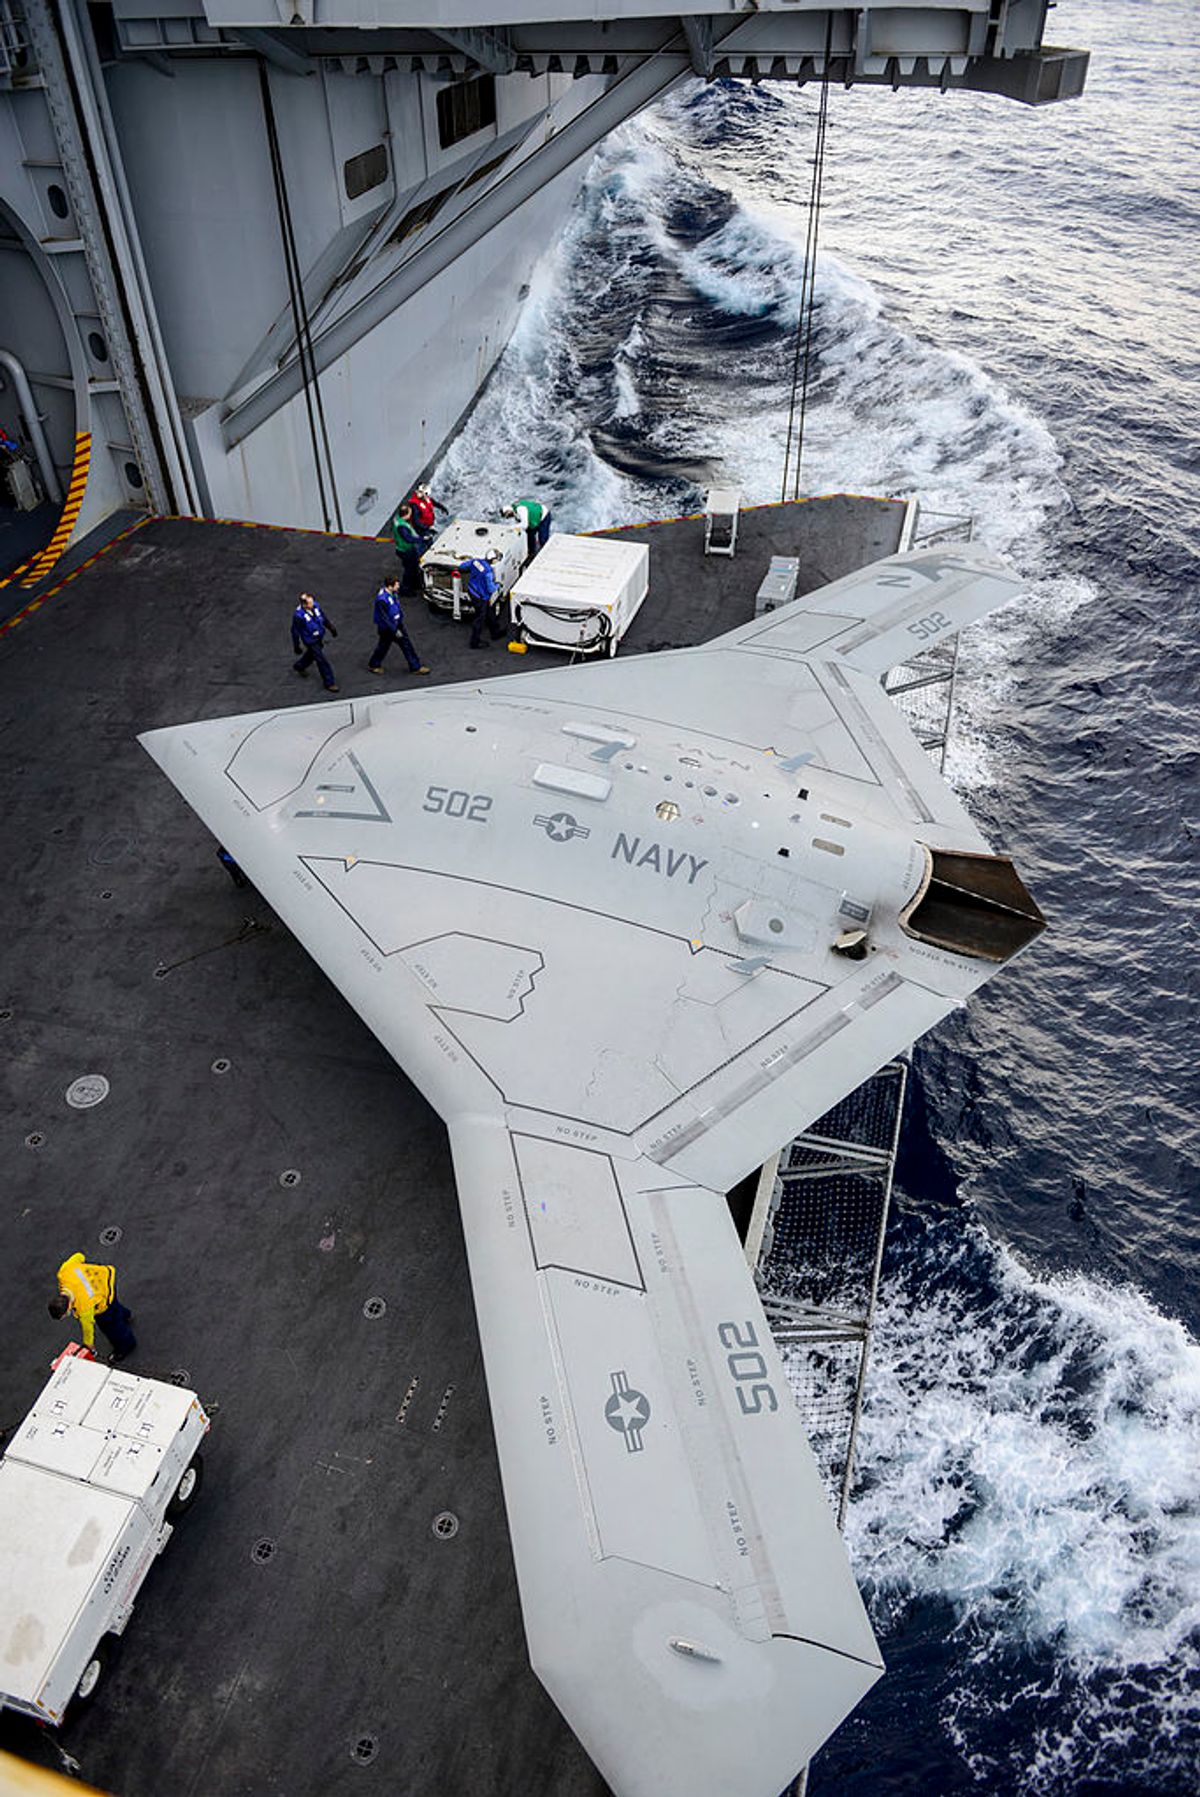 Robot Plane Flies from U.S. Navy Carrier